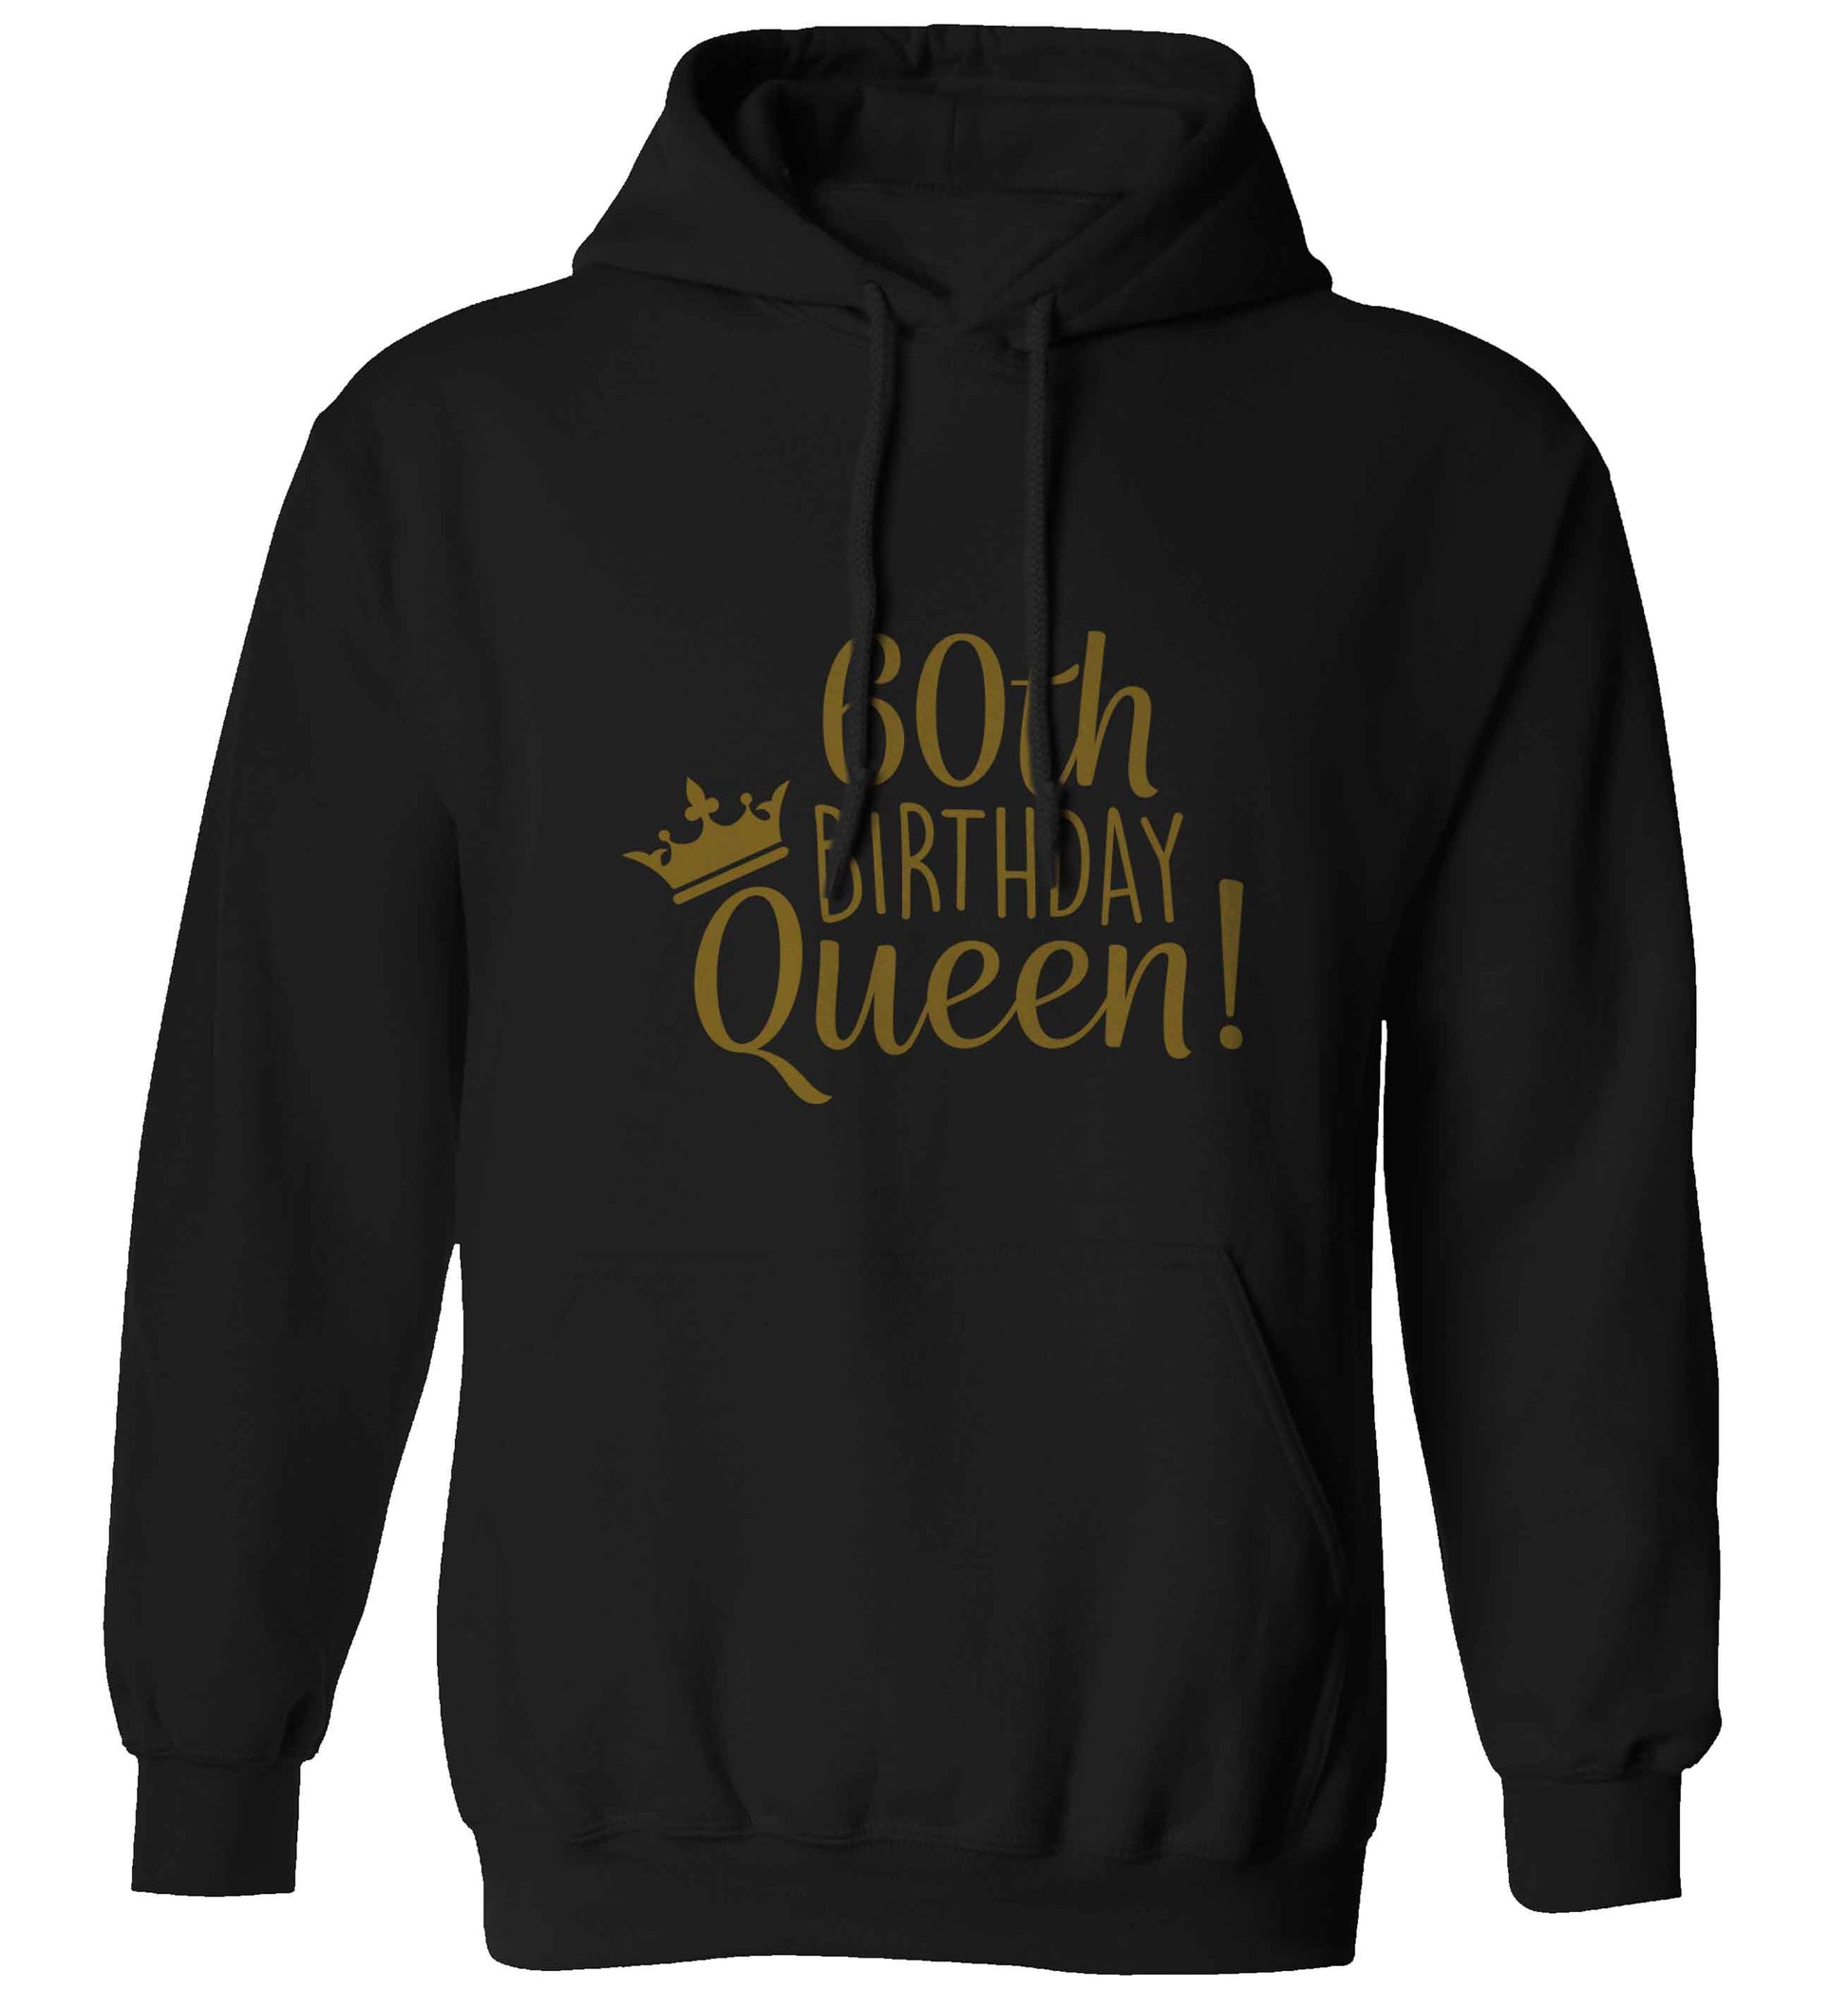 60th birthday Queen adults unisex black hoodie 2XL